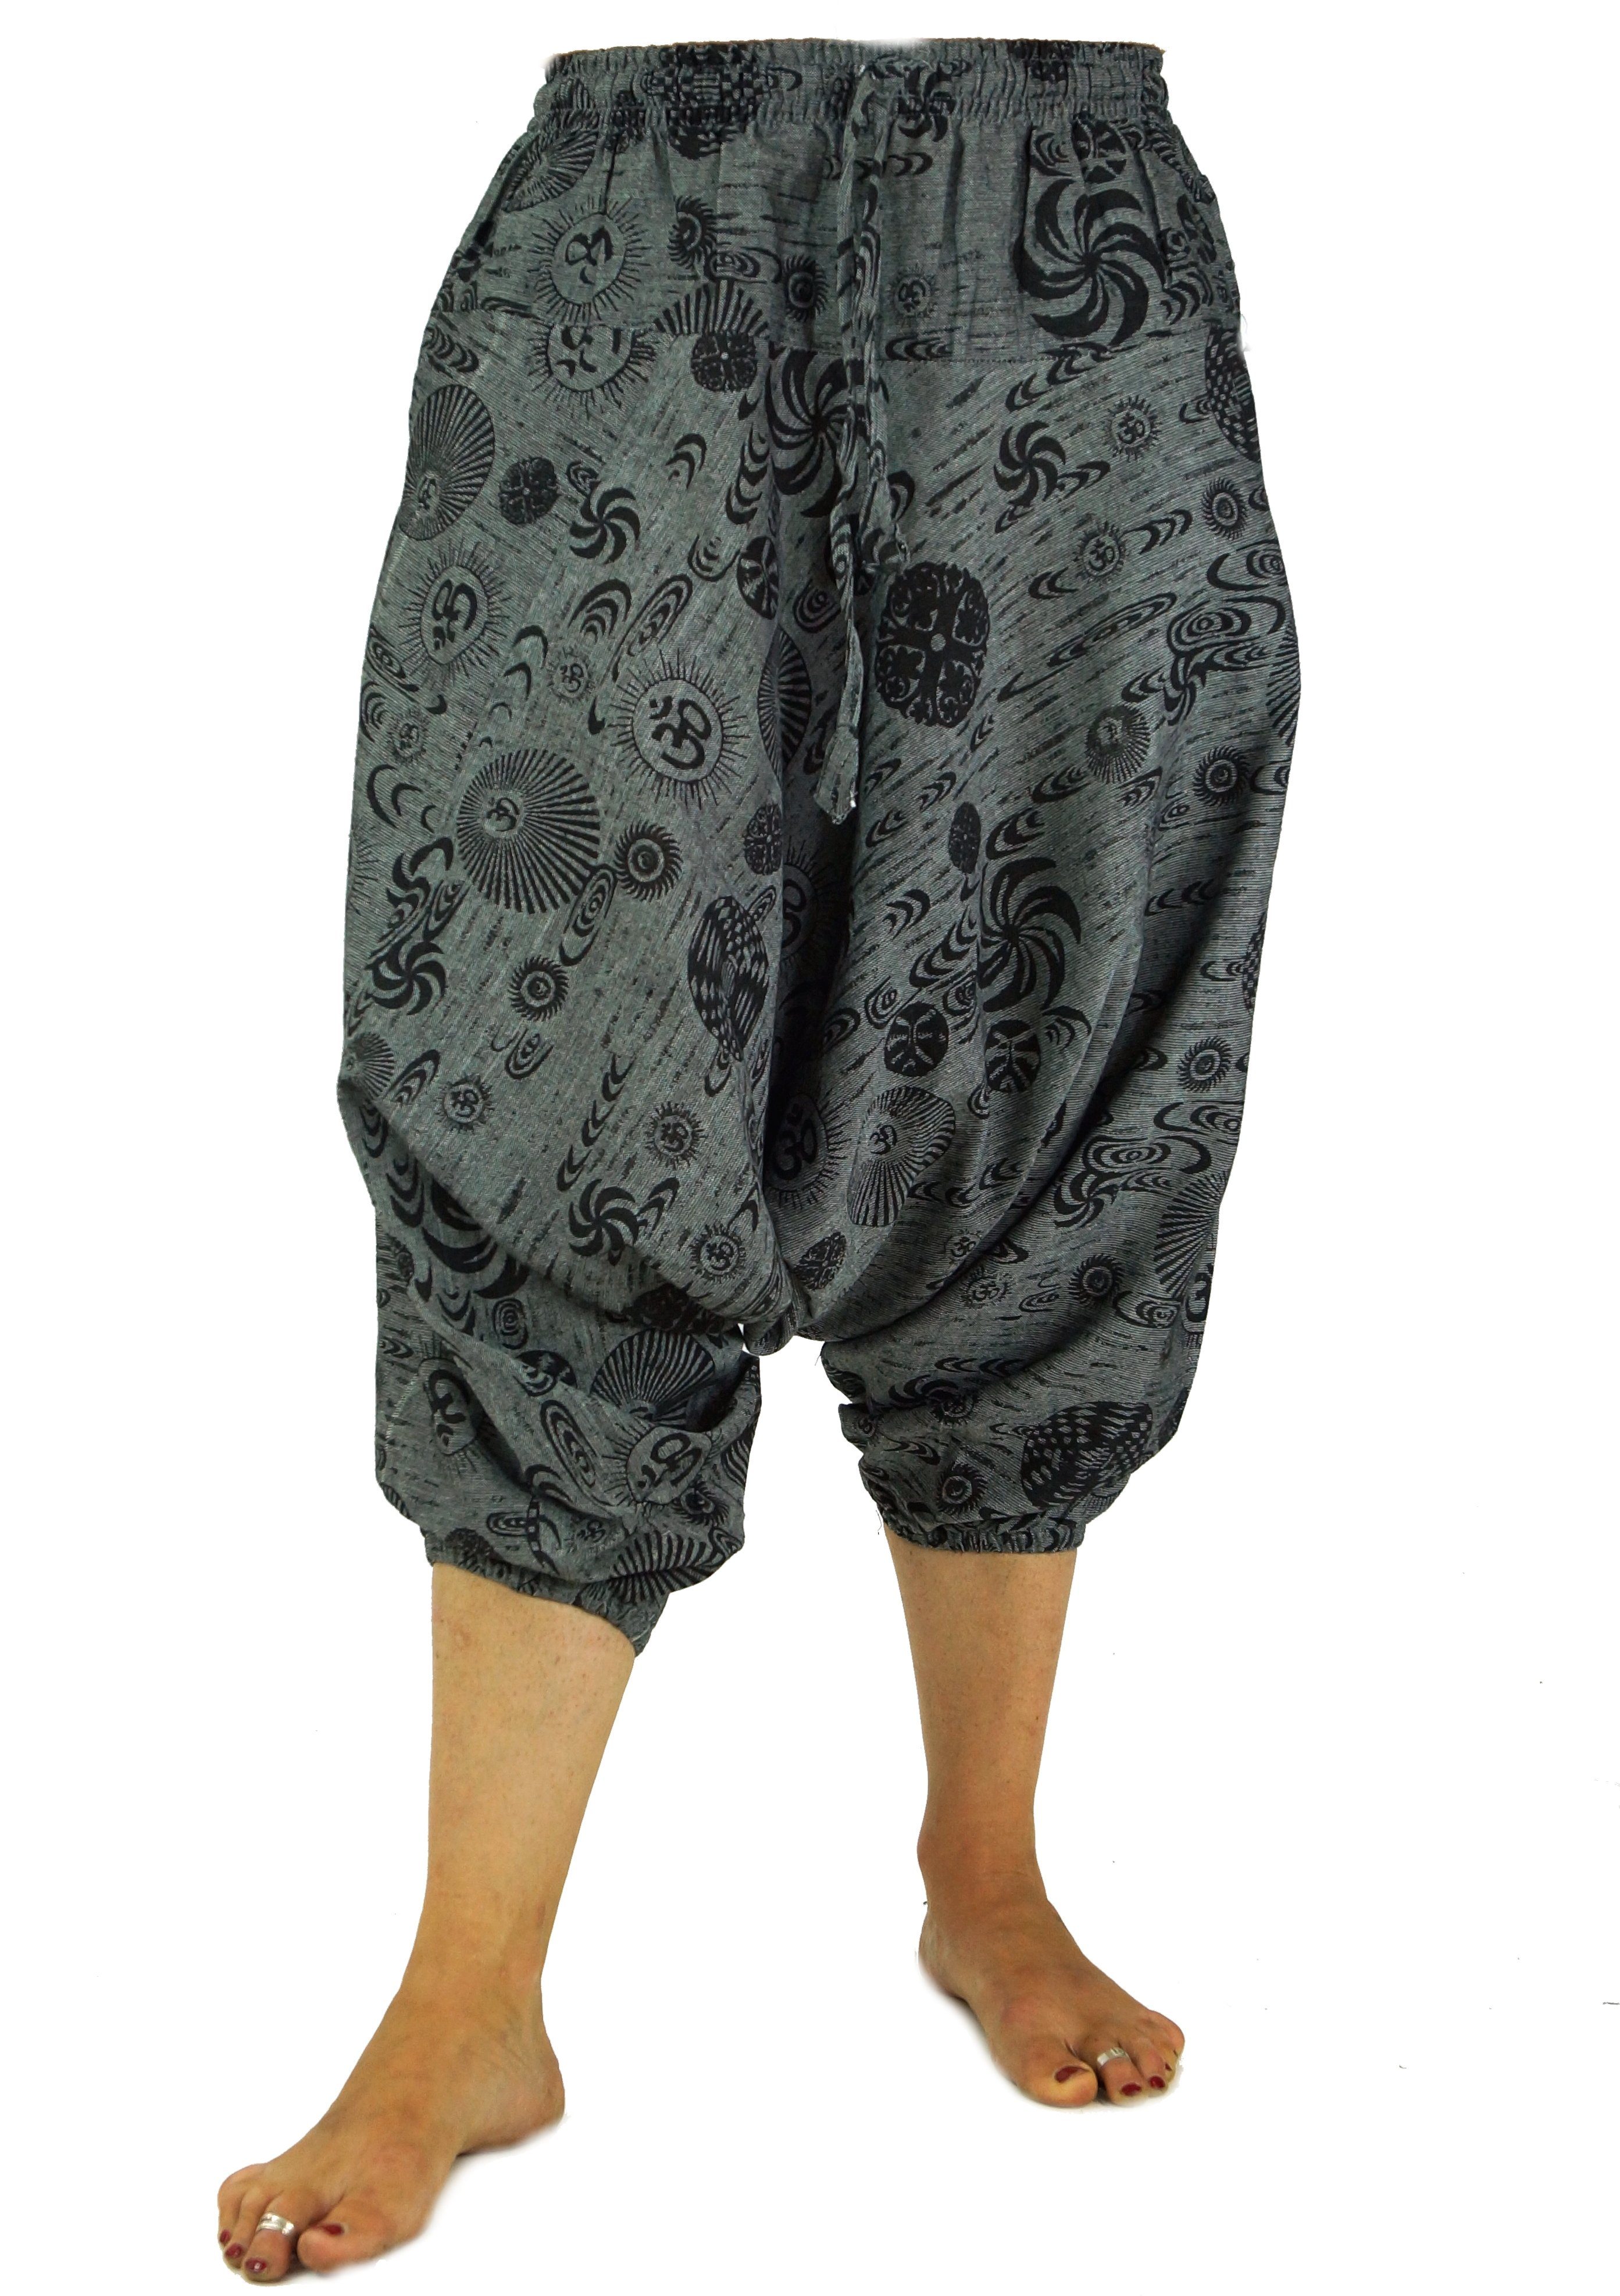 Ethno Pluderhose 7/8 - Style, Shorts Länge Relaxhose Bekleidung Guru-Shop Aladinhose alternative grau